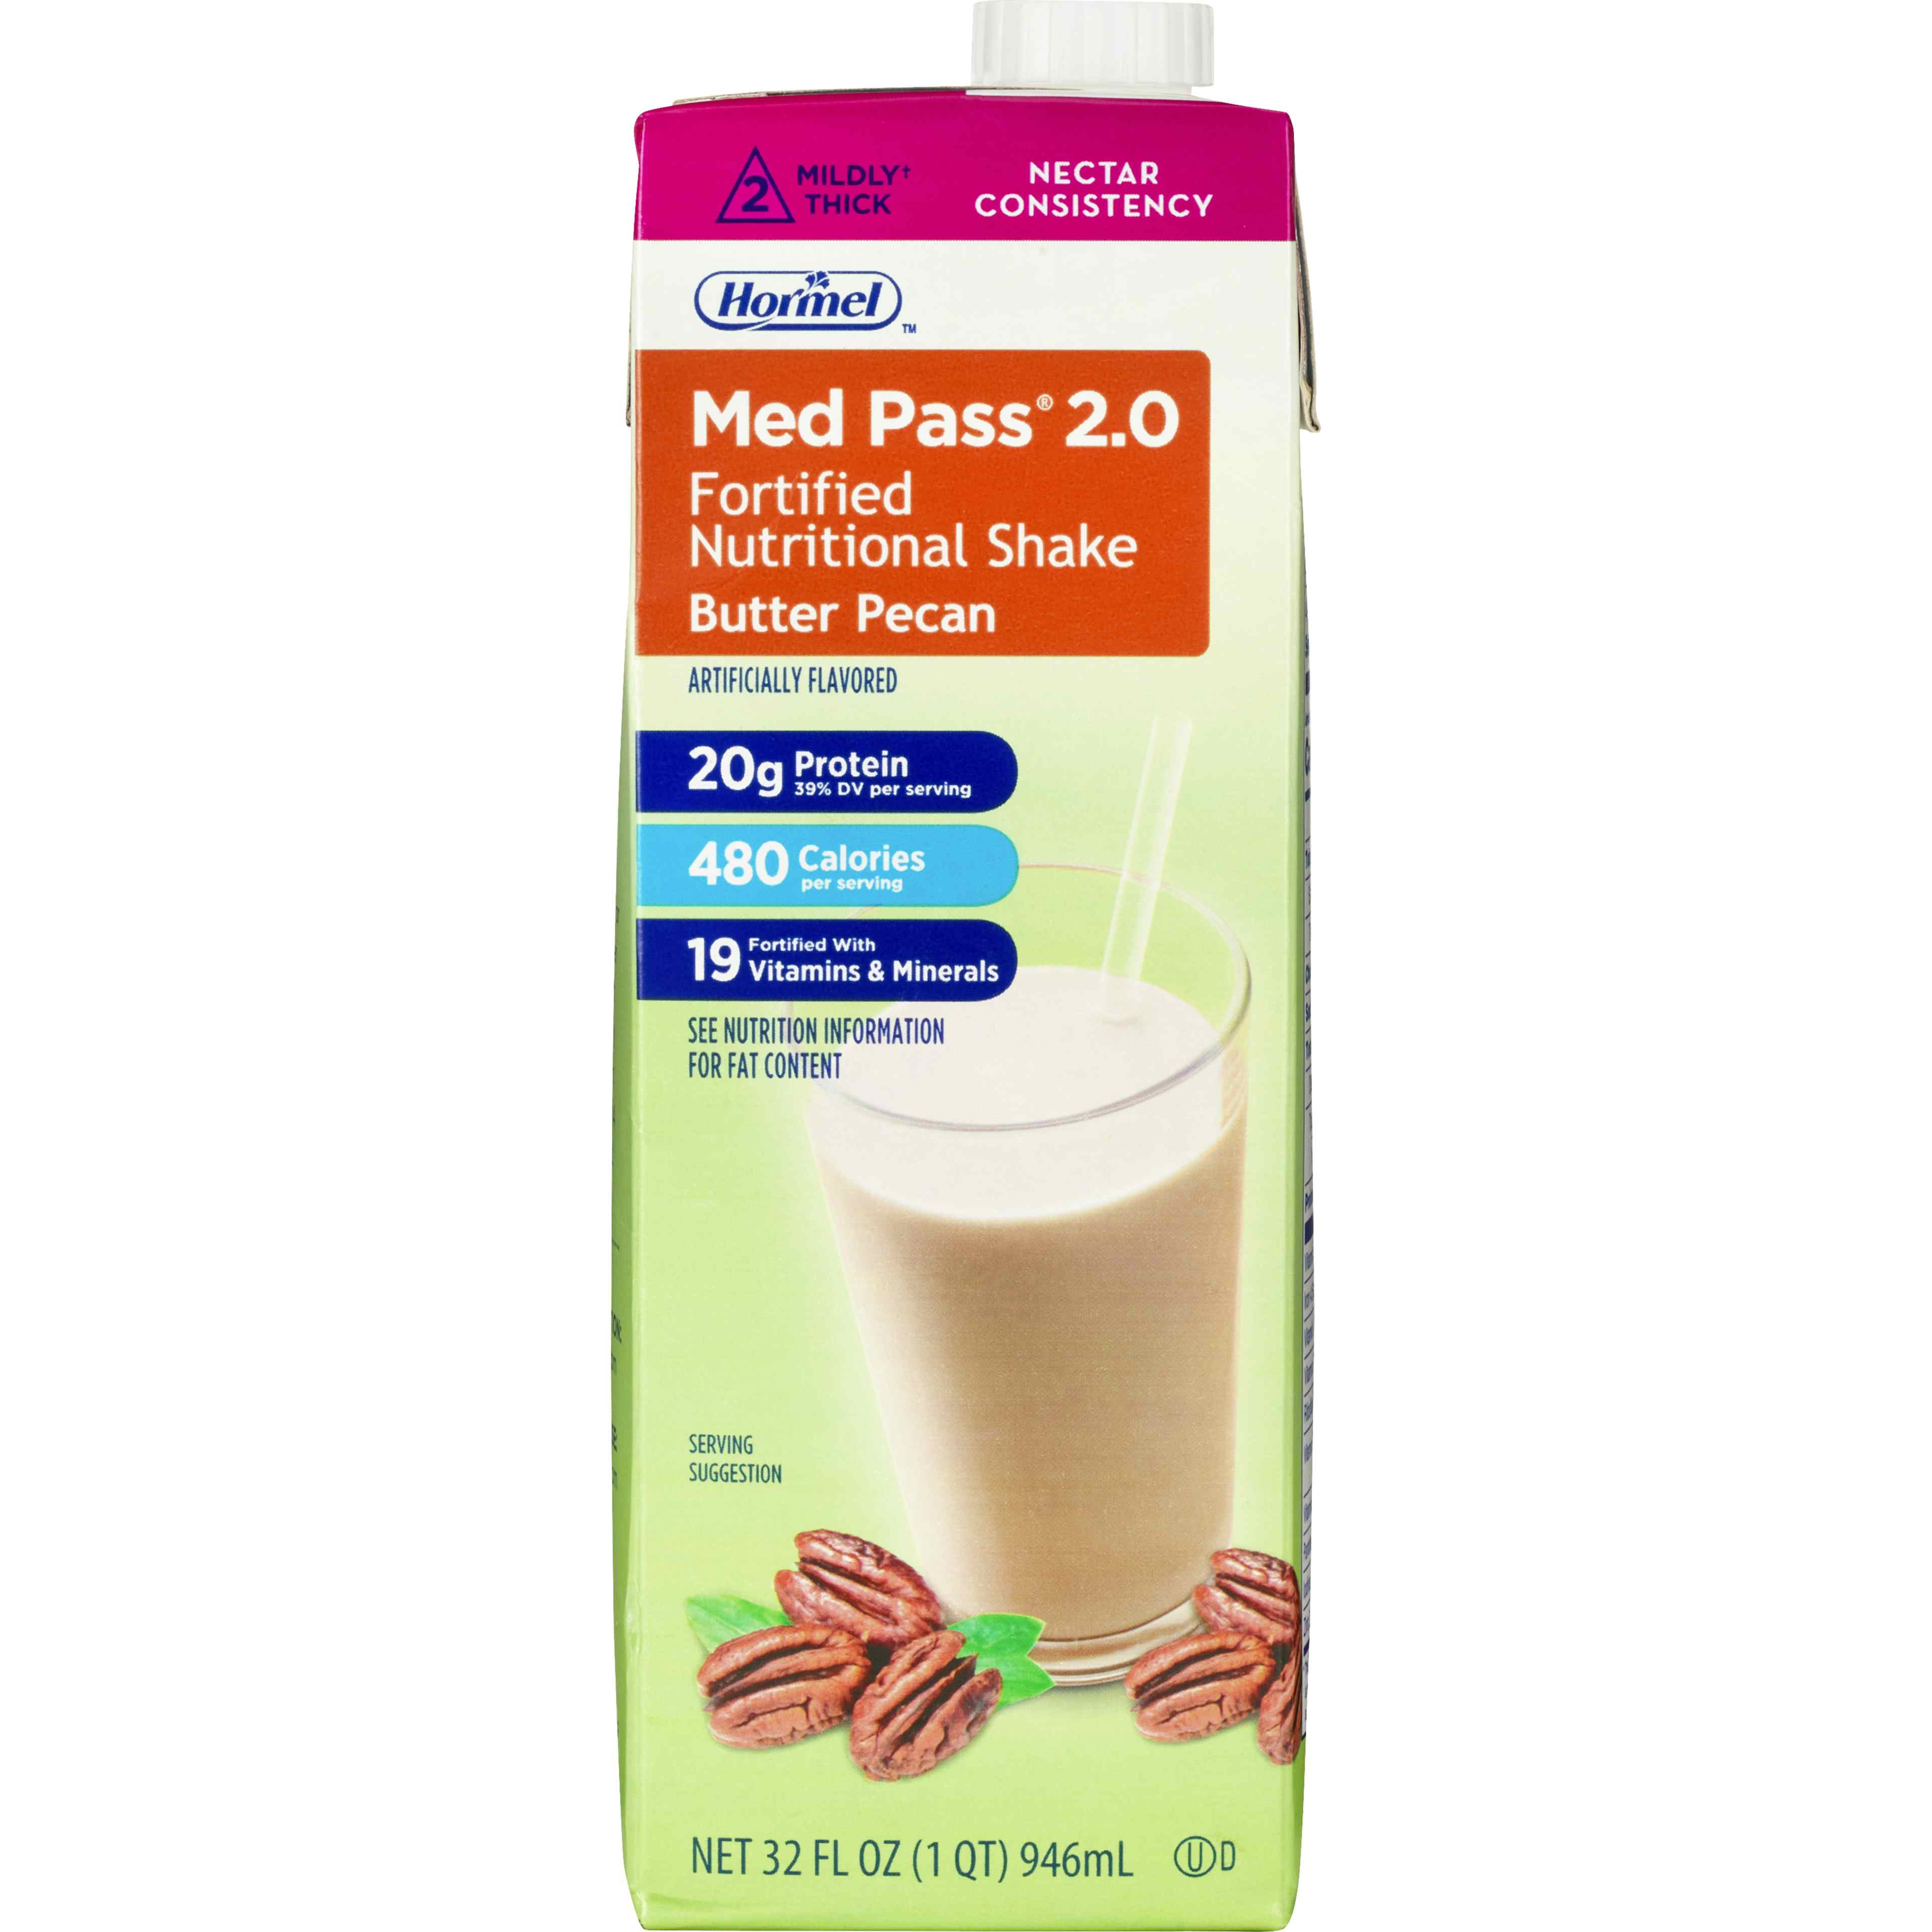 Med Pass 2.0 Nutritional Shake, Carton